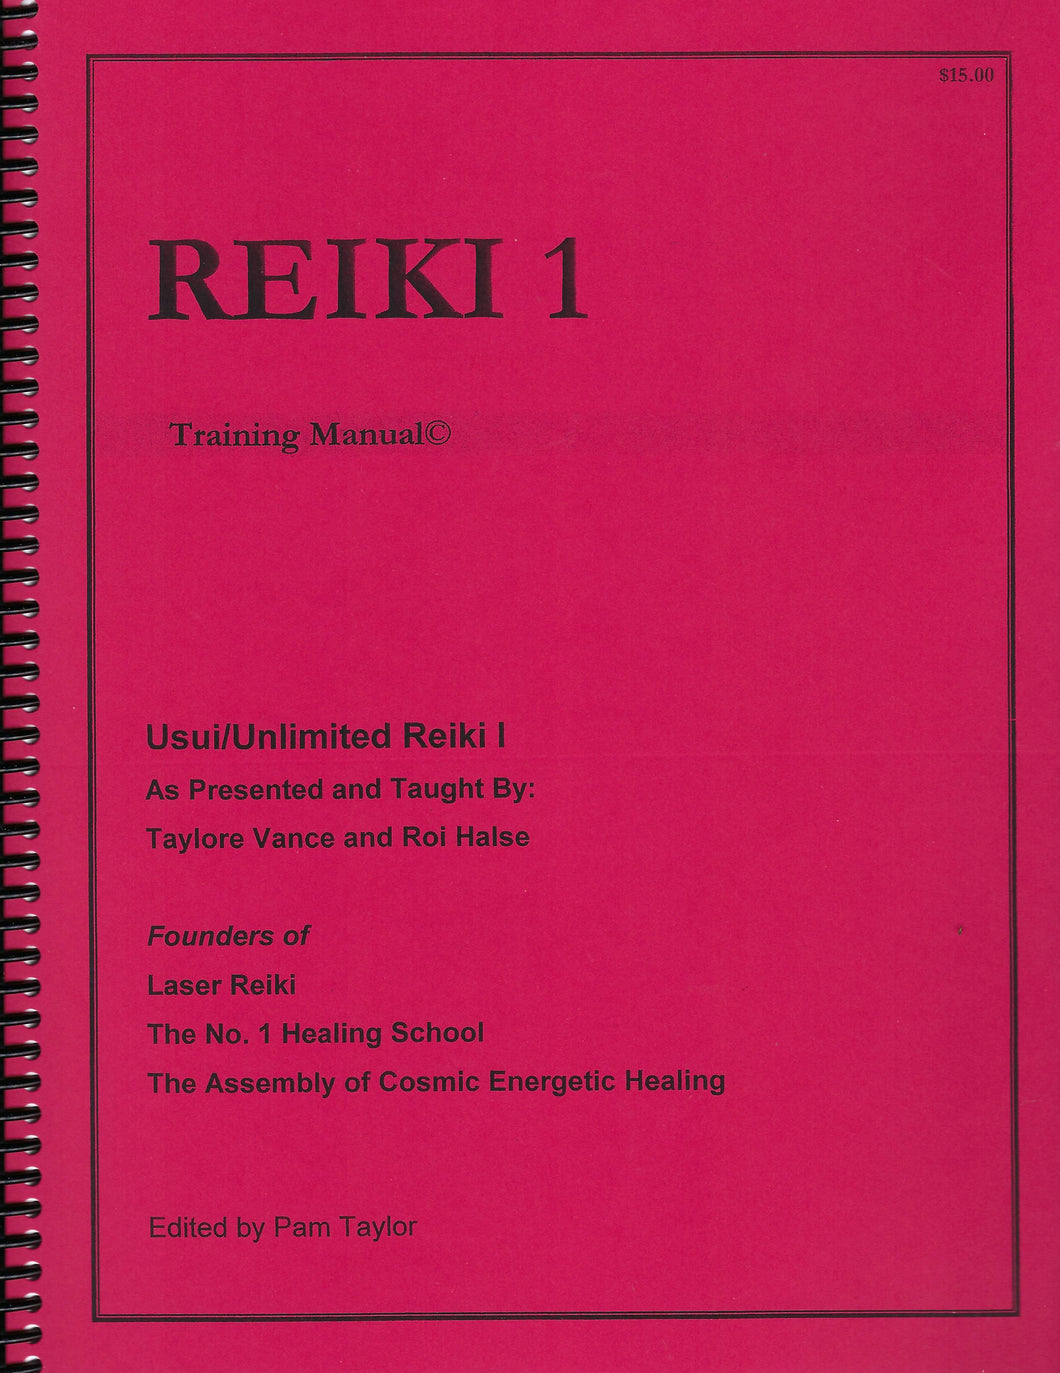 Book: Reiki 1 Student Manual